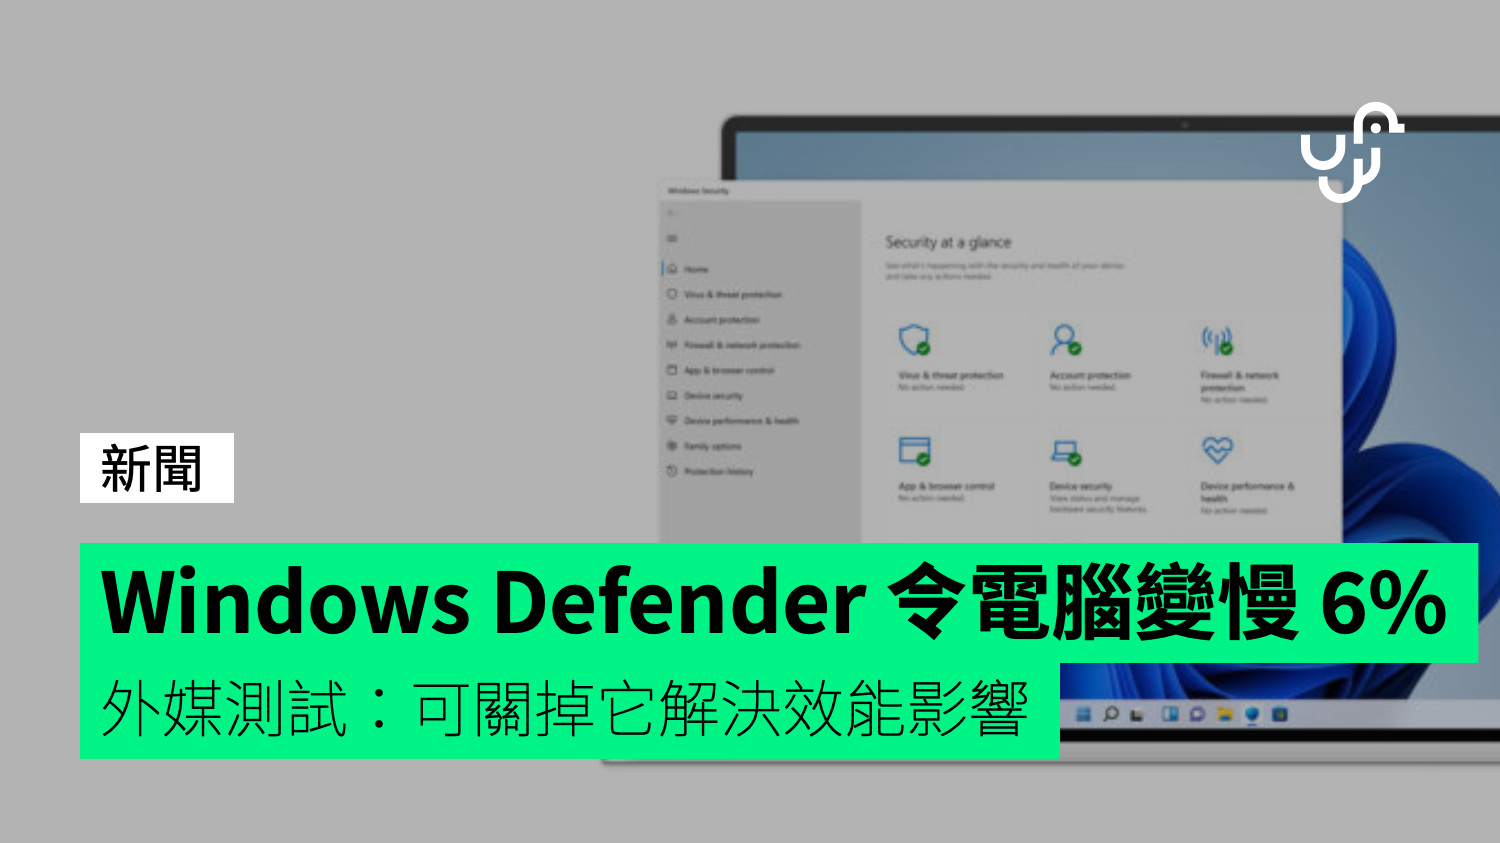 Windows Defender slows Intel processors by 6%